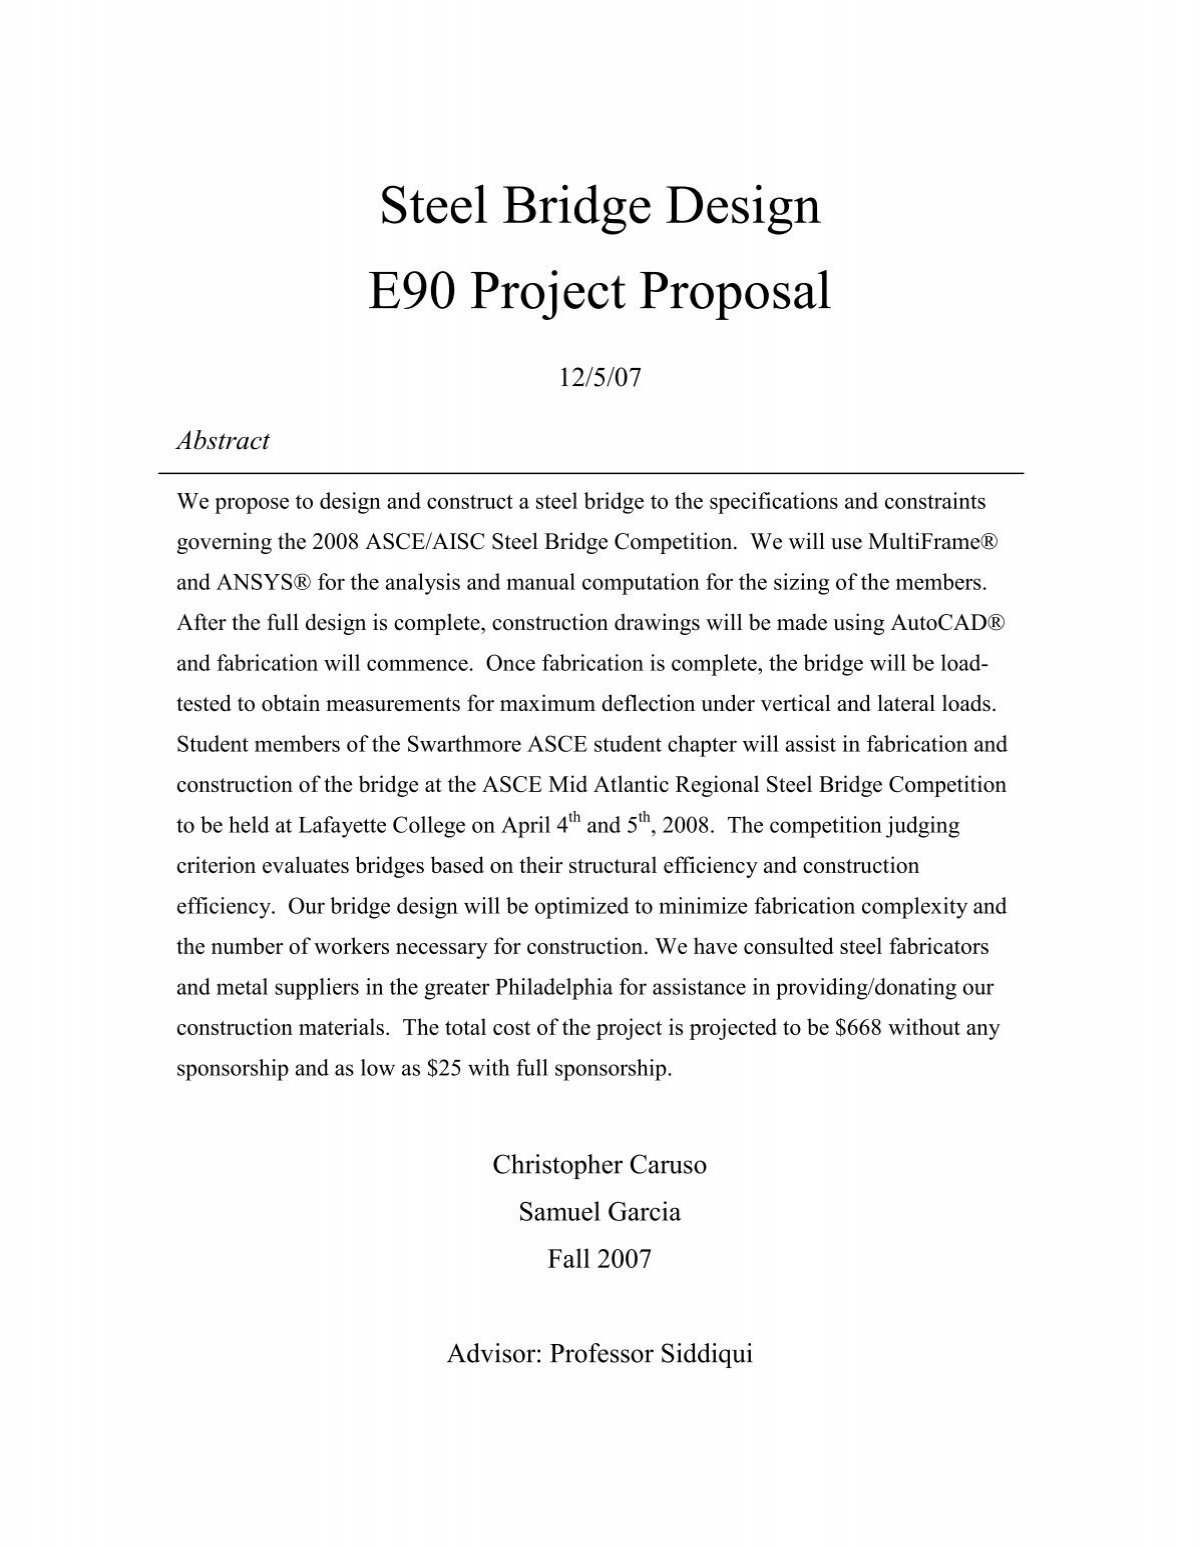 Steel Bridge Design E90 Project Proposal